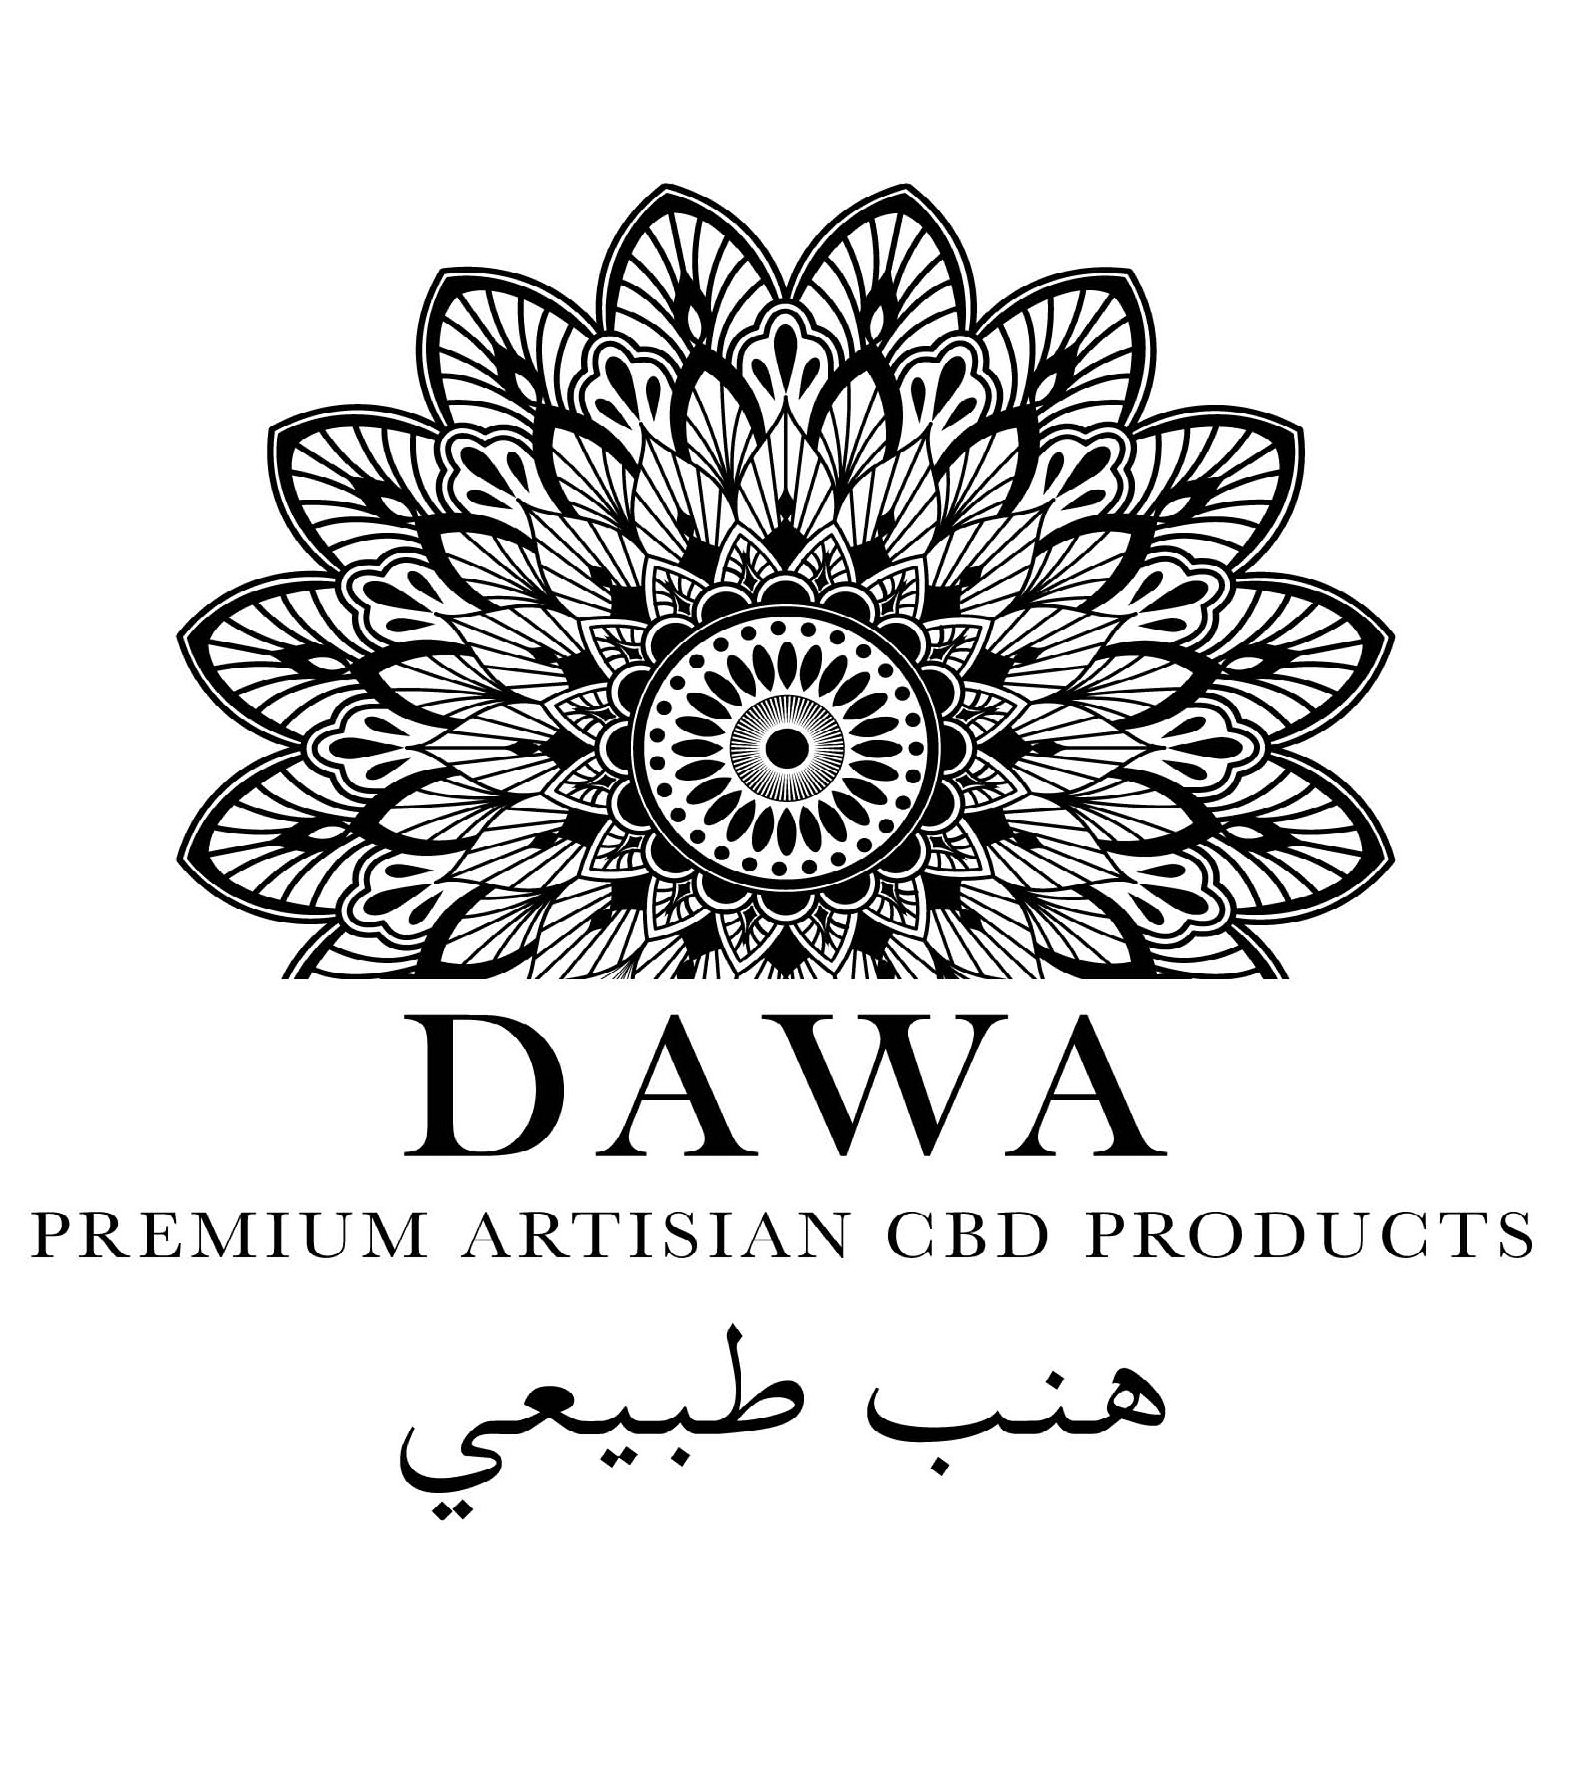  DAWA PREMIUM ARTISAN CBD PRODUCTS